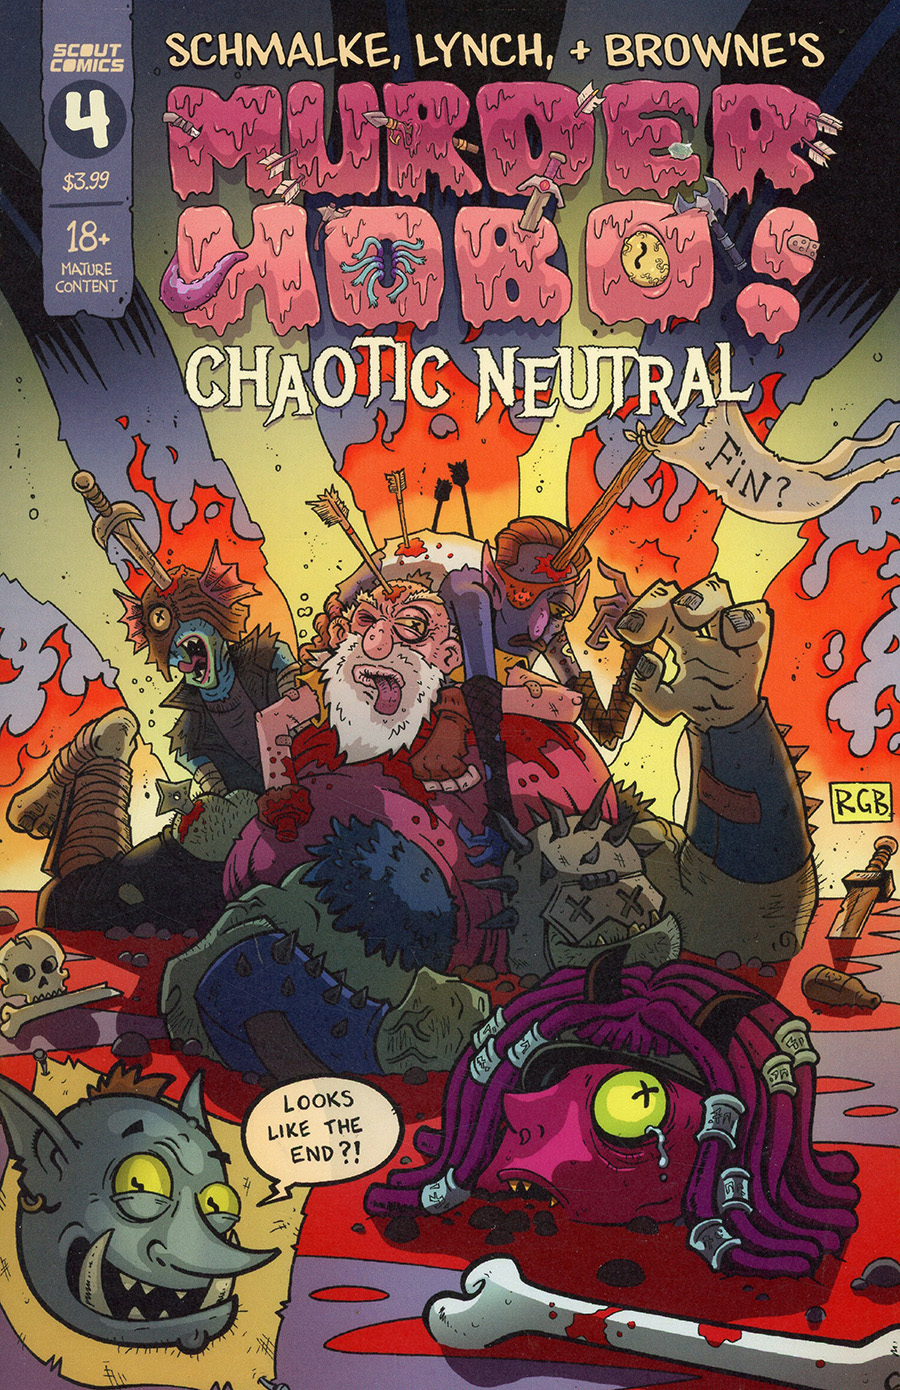 Murder Hobo Chaotic Neutral #4